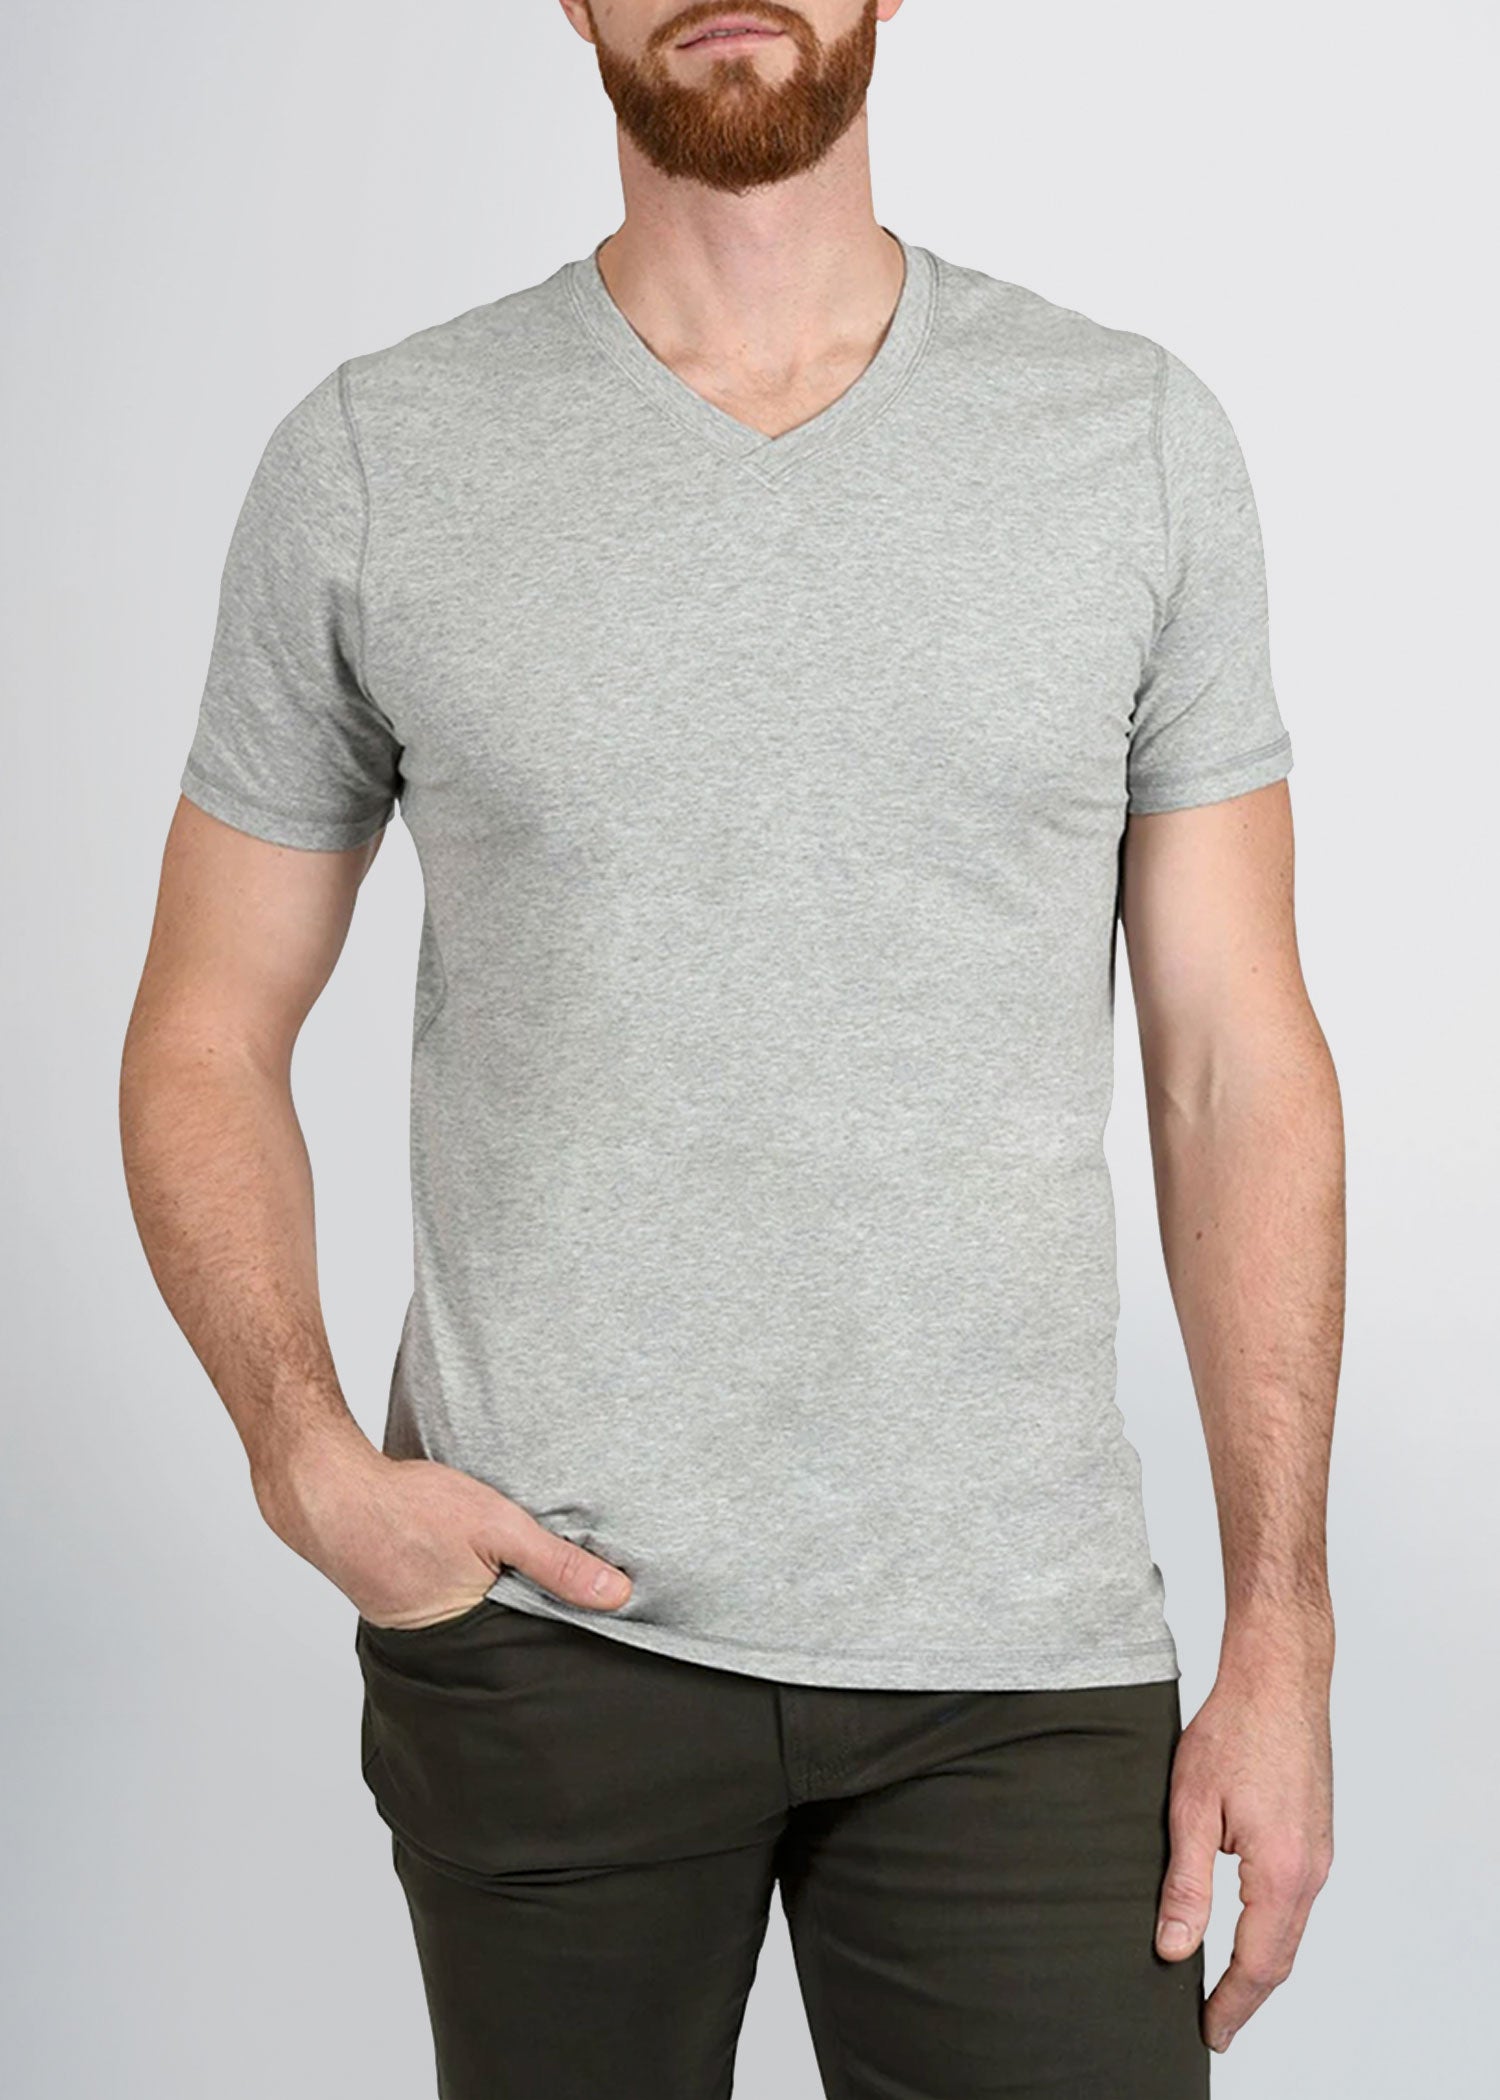 serie Blive gift Spytte ud Slim Fit Men's V Neck T Shirts in Grey | American Tall